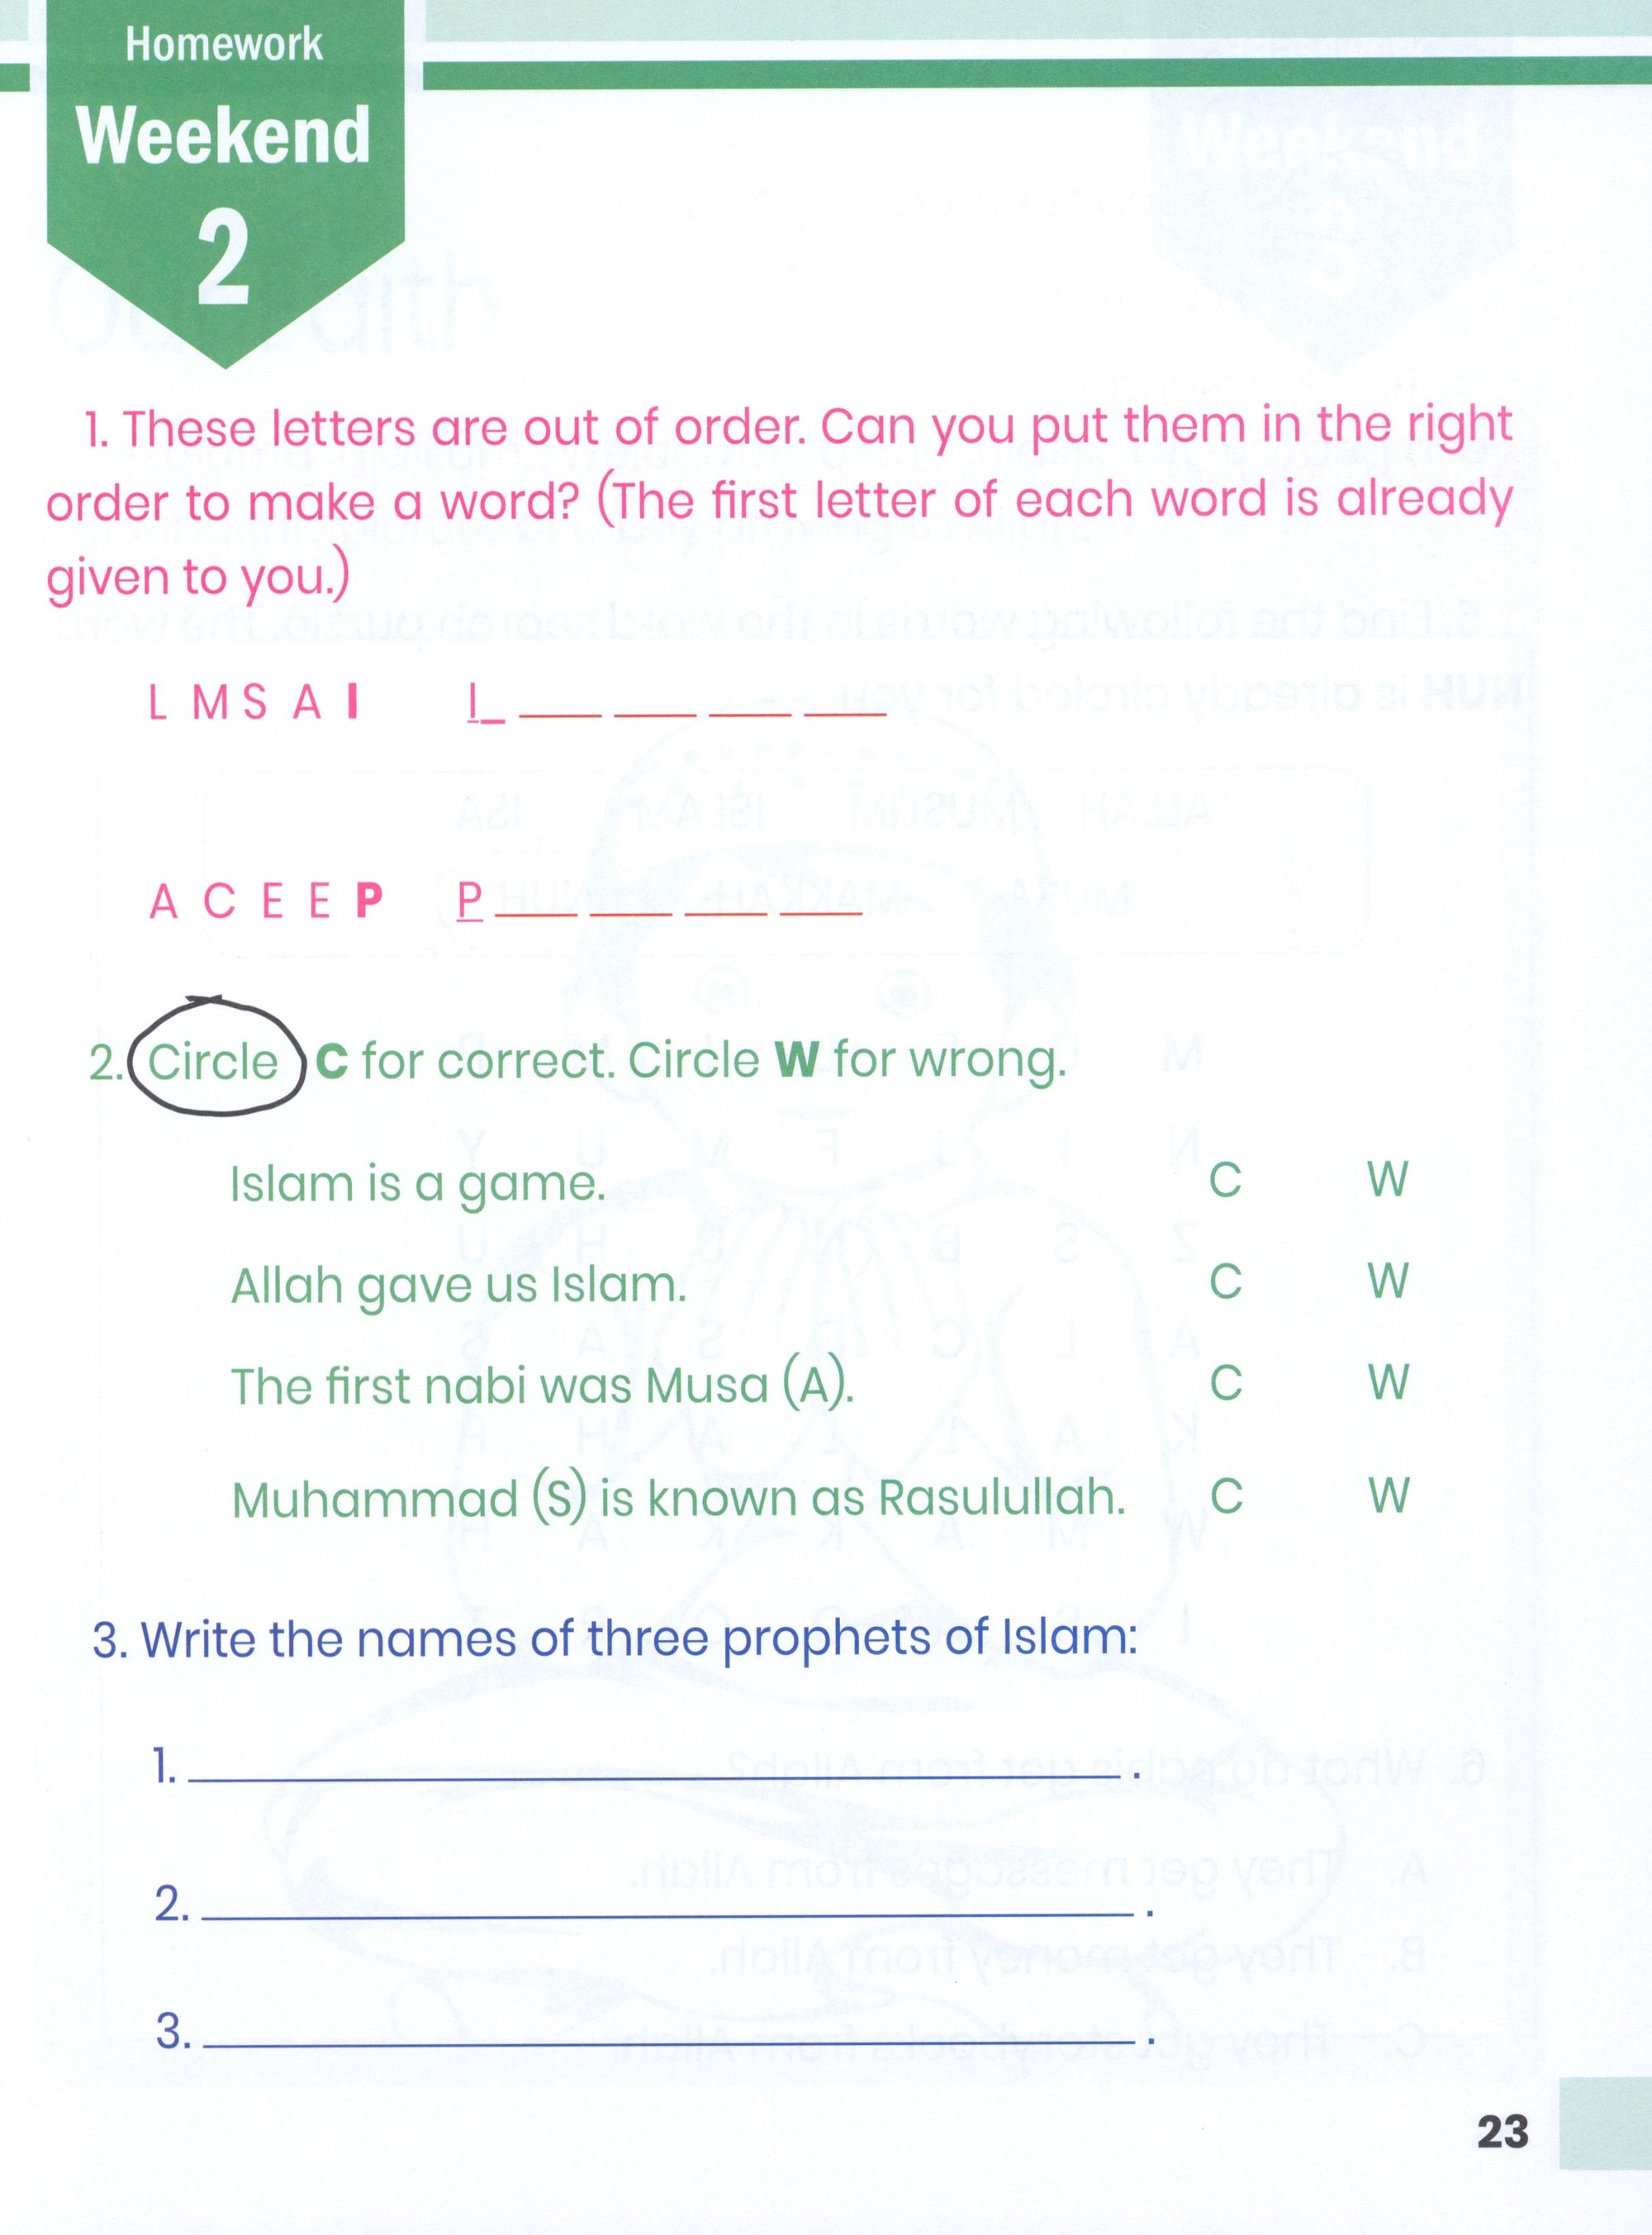 Weekend Learning Islamic Studies Level 1